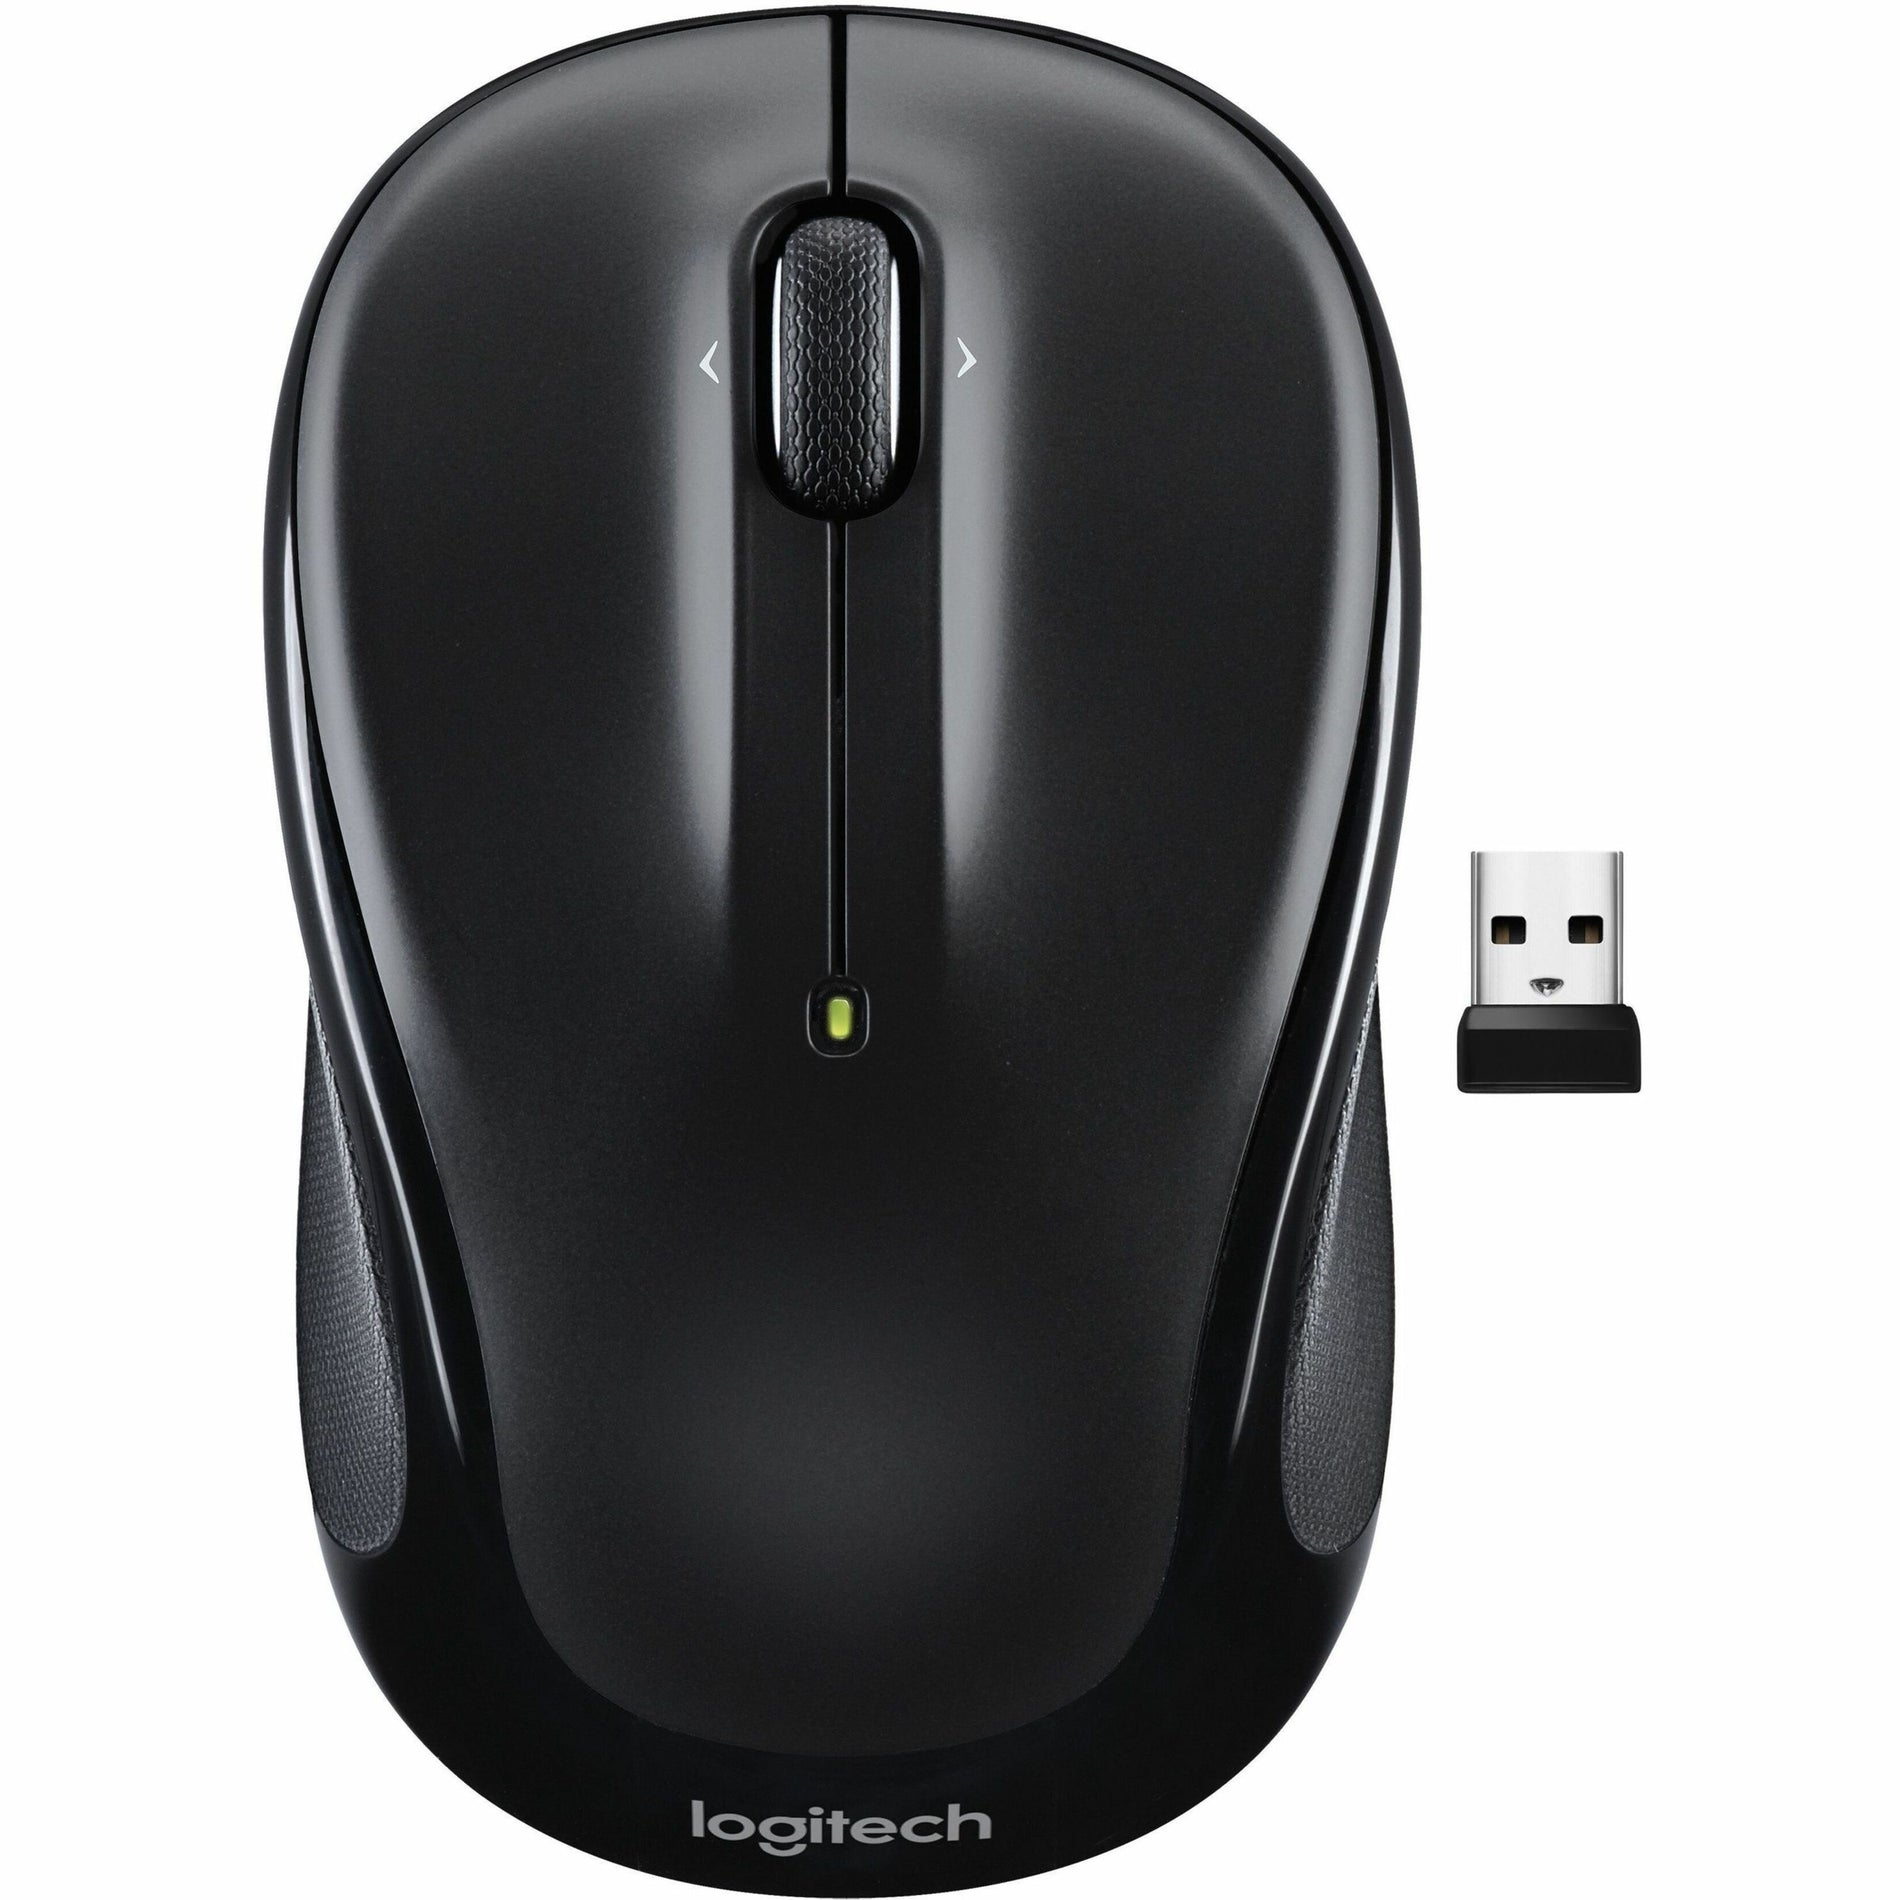 Logitech 910-006825 M325S Mouse Wireless Black, 1 Year Limited Warranty, Environmentally Friendly